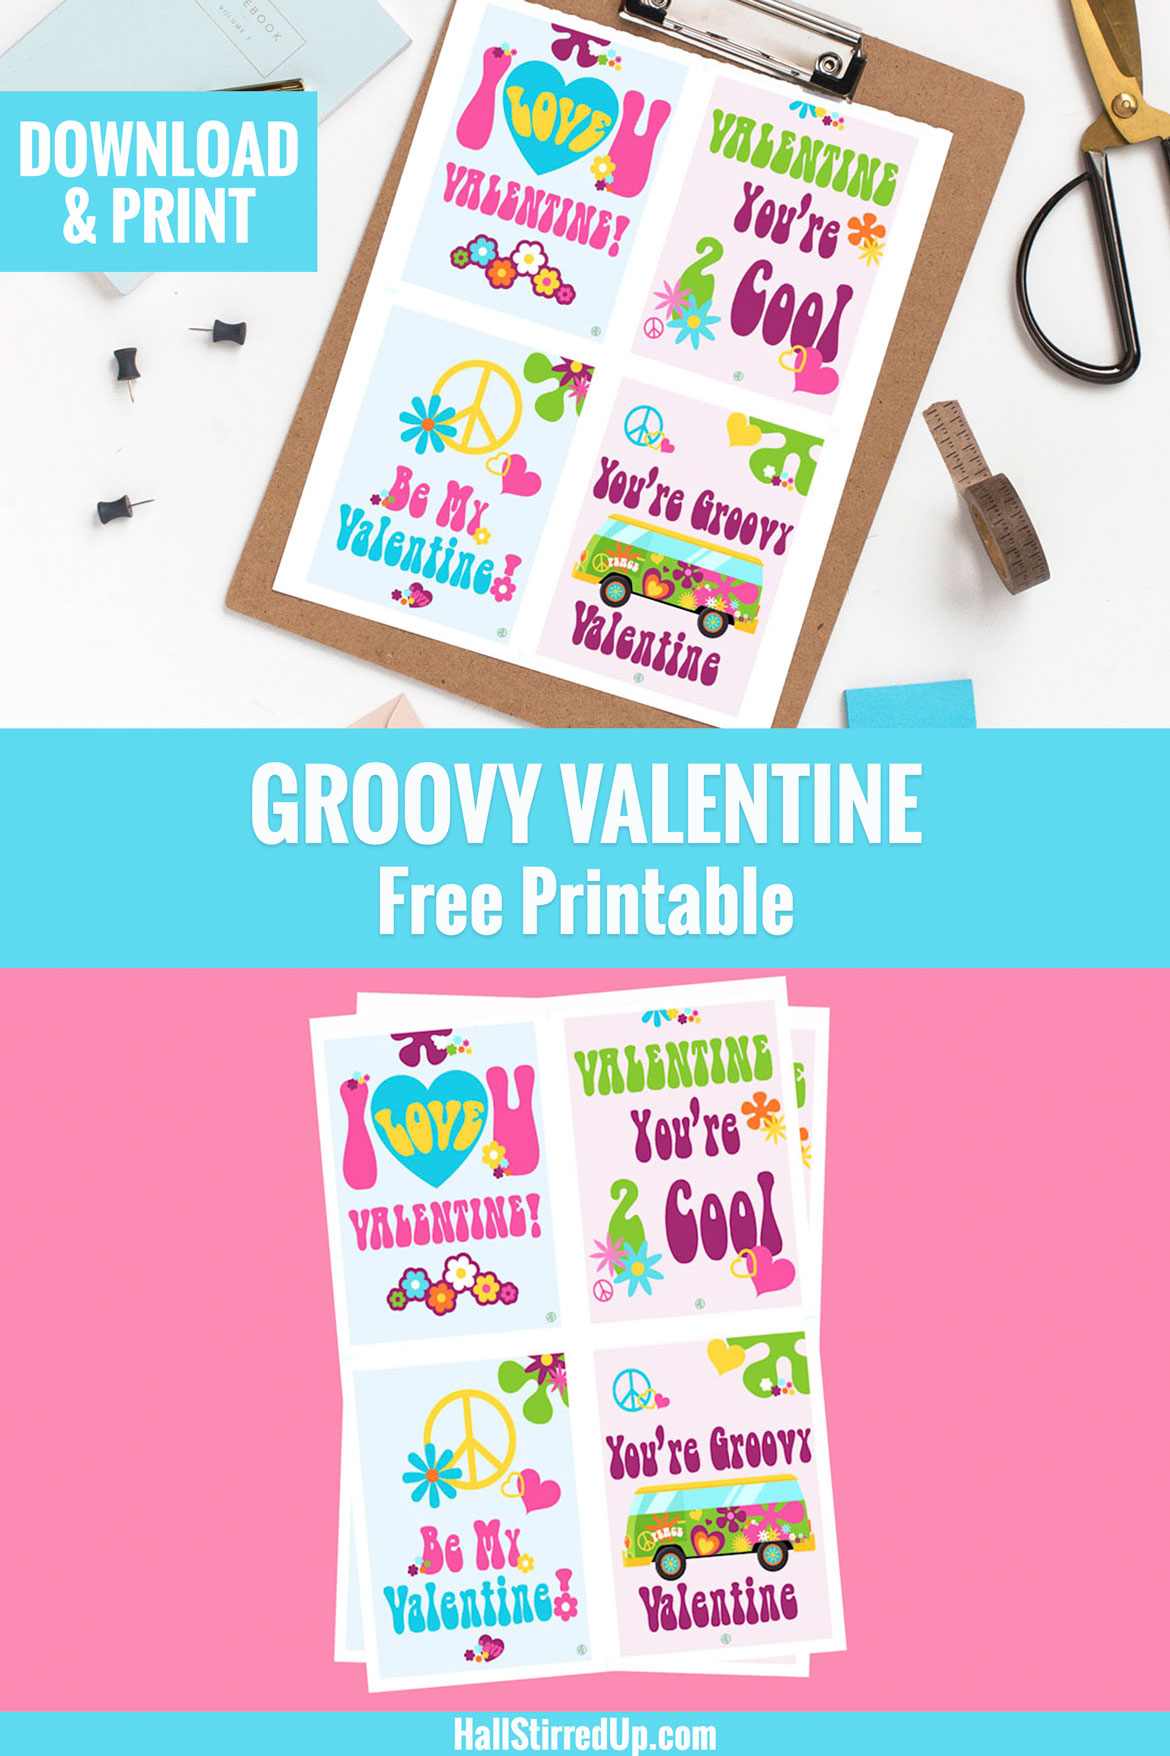 Grab your groovy Valentine free printable from HallStirredUp.com